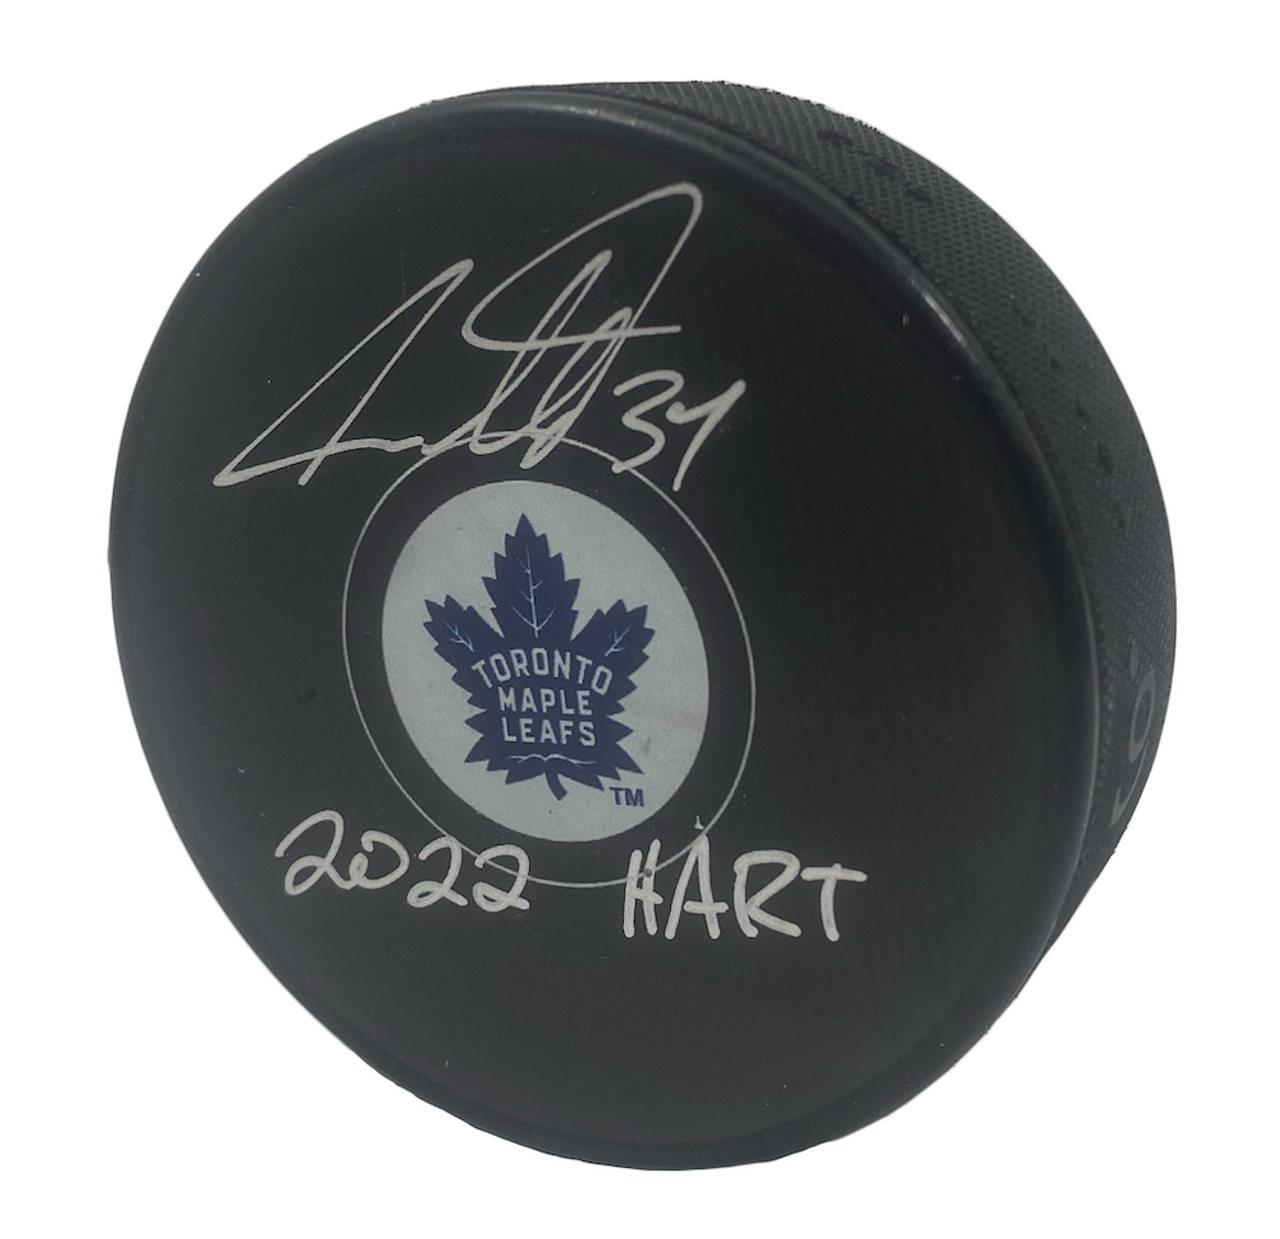 Framed Auston Matthews Toronto Maple Leafs Autographed 2022